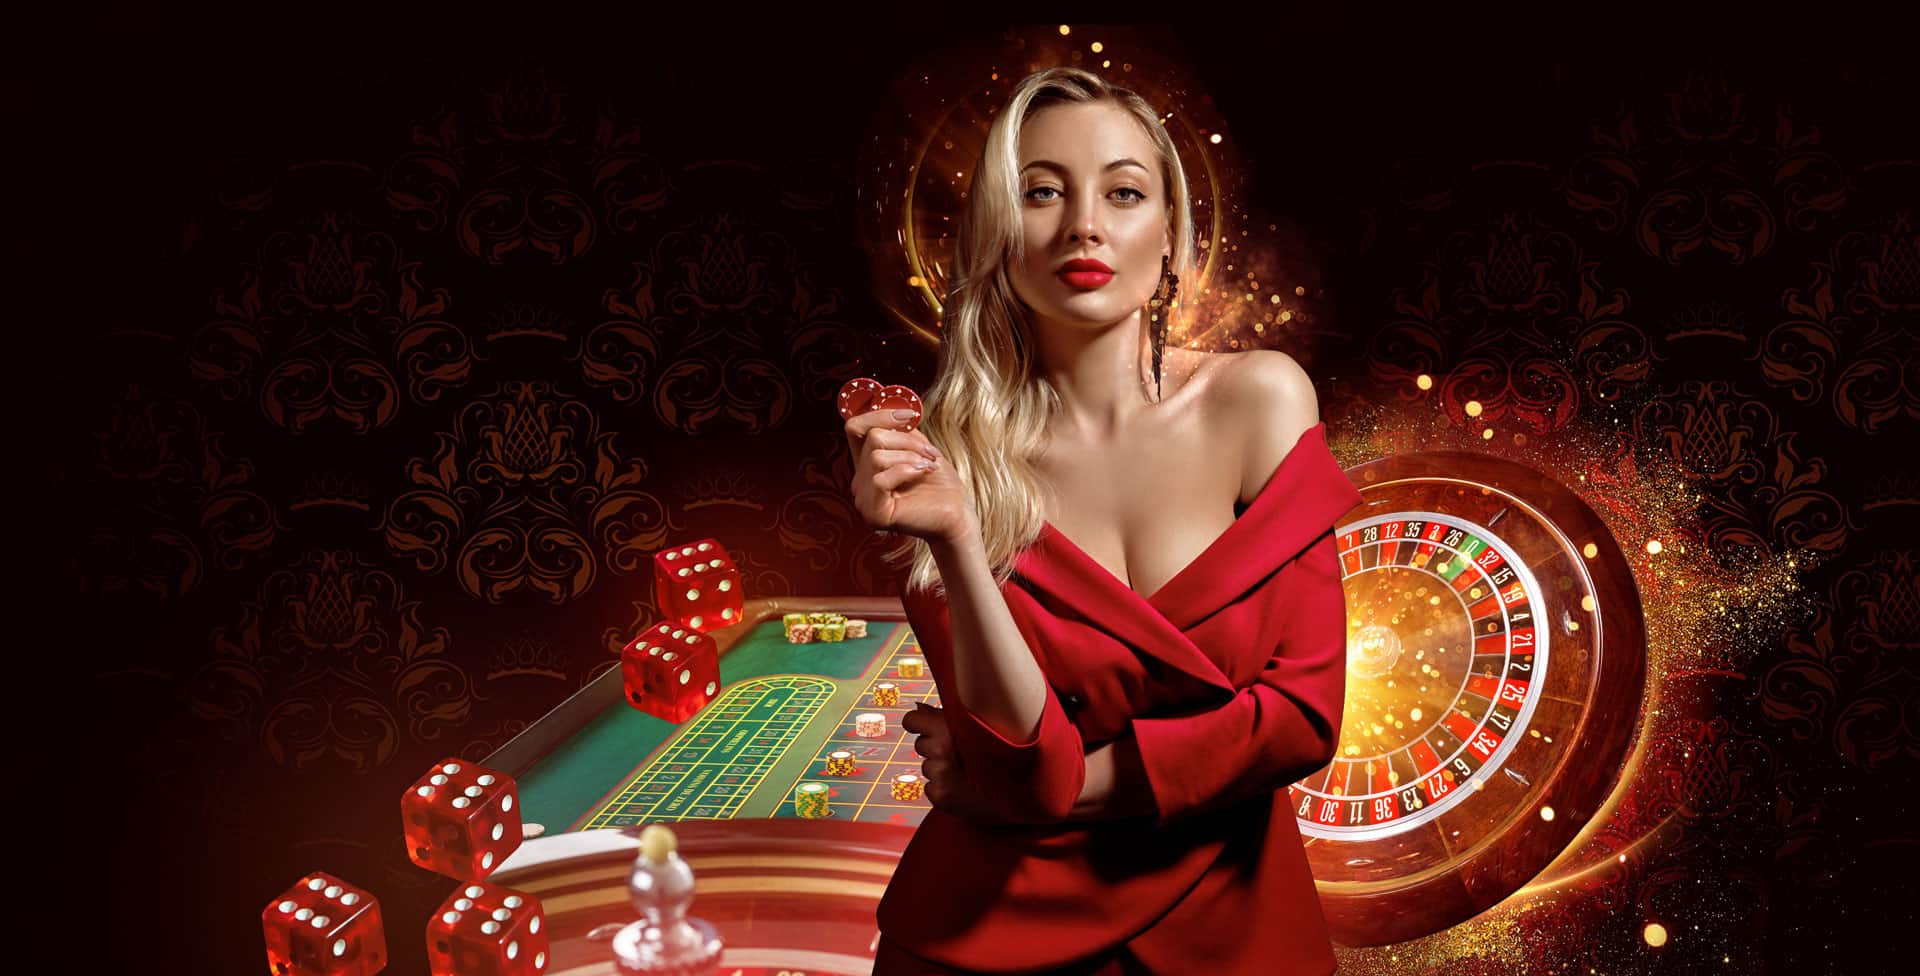 online casino 888